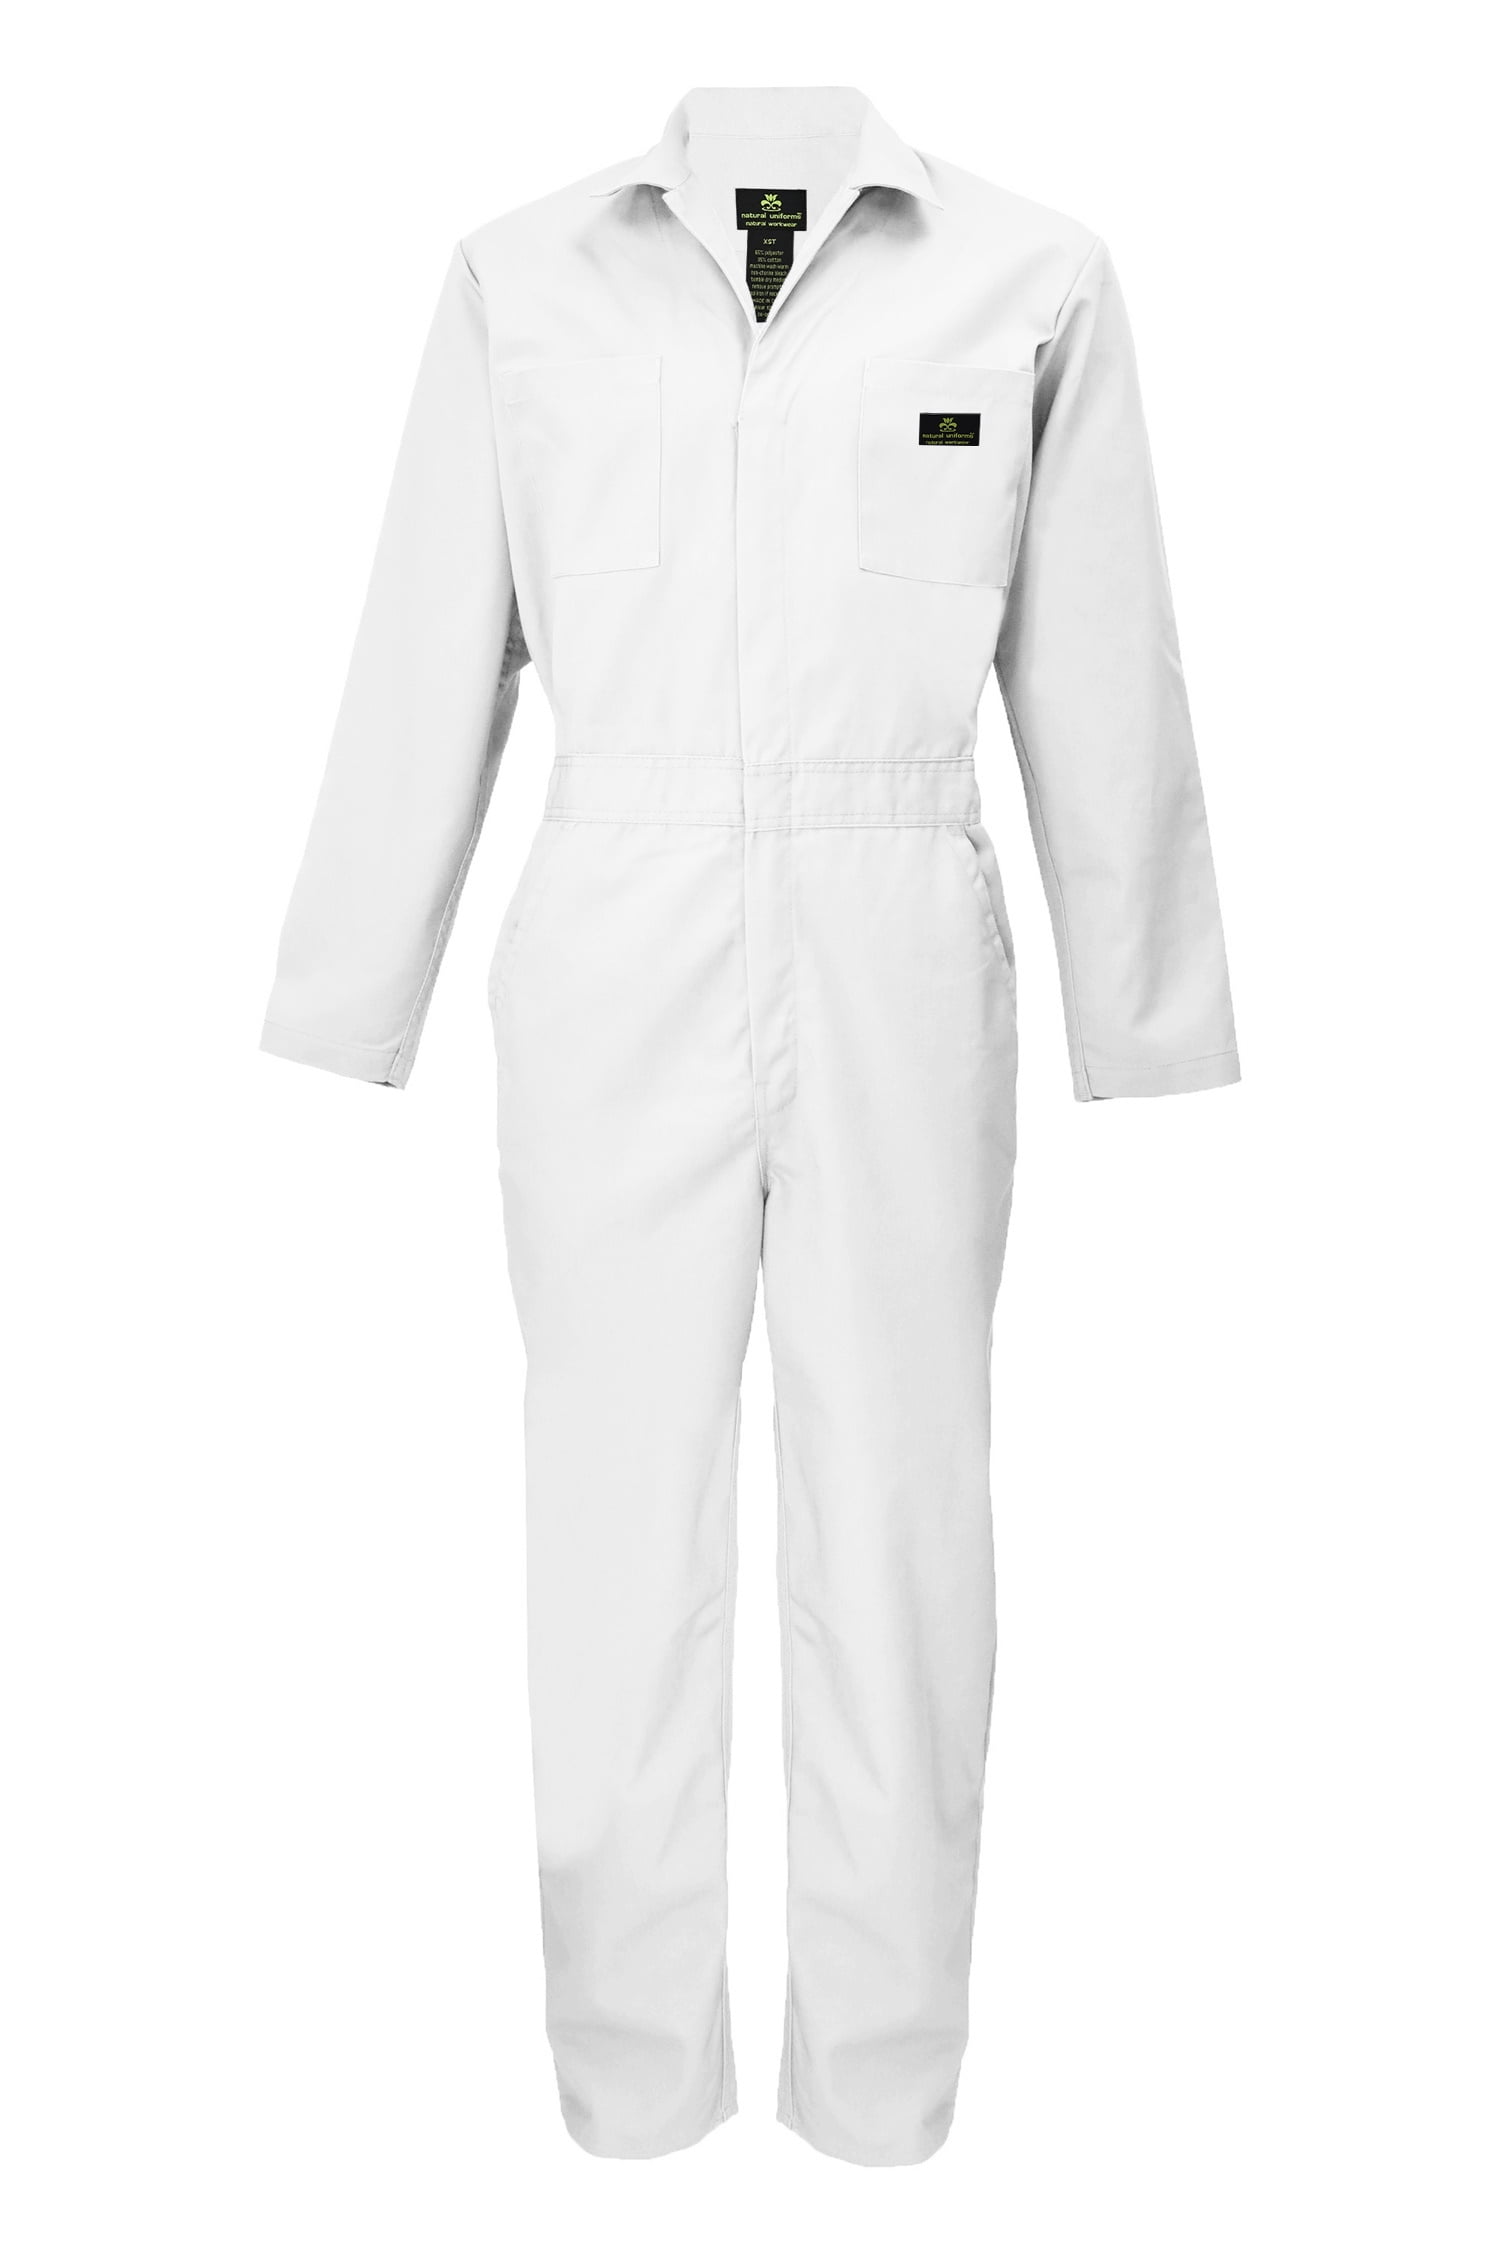 white long overalls